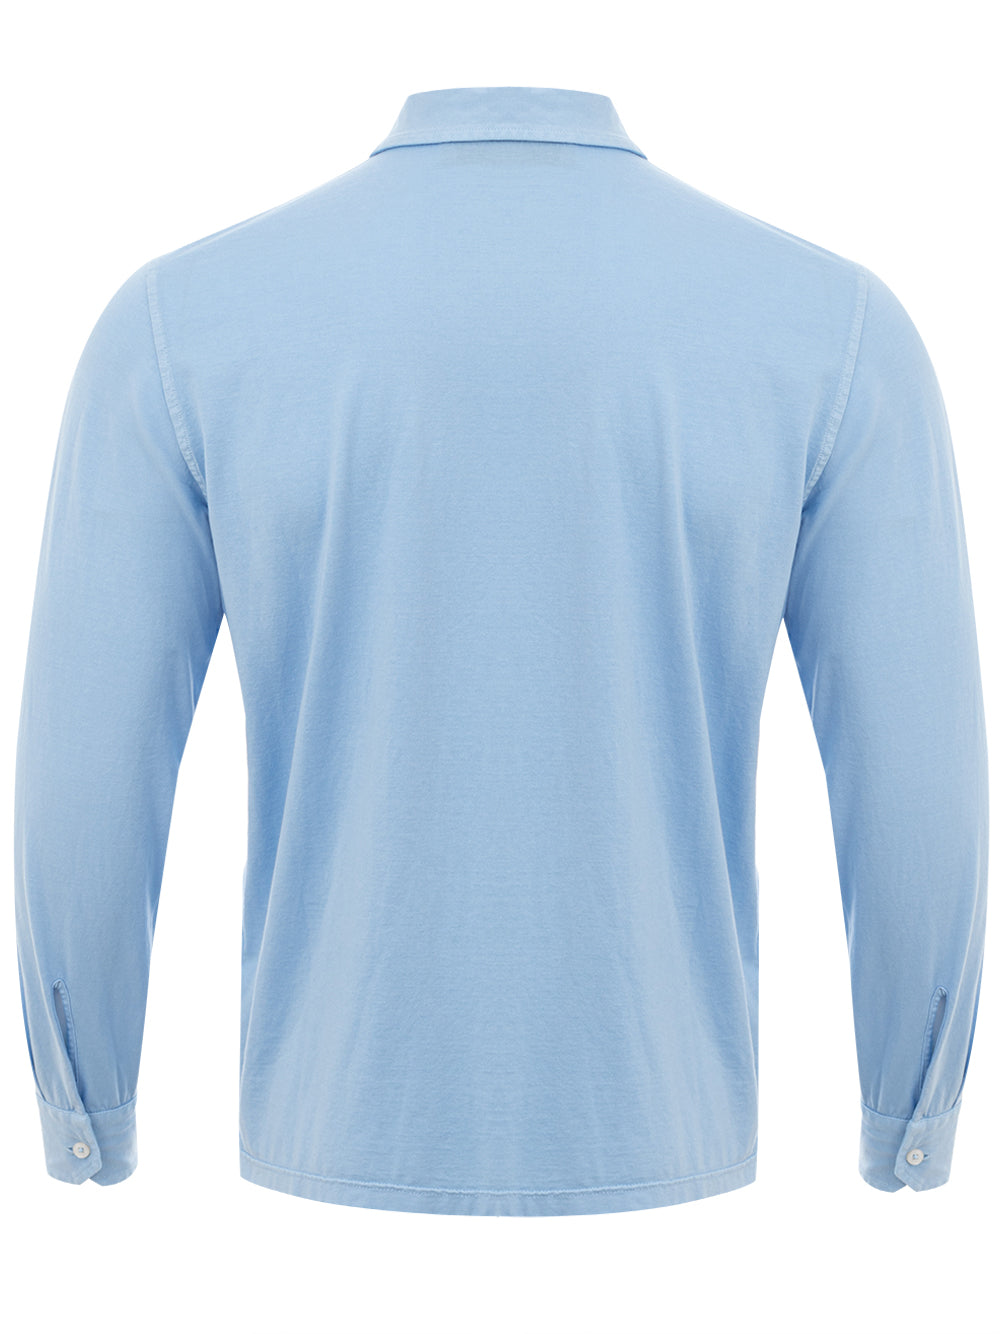 Gran Sasso Light Blue Shirt Long Sleeves